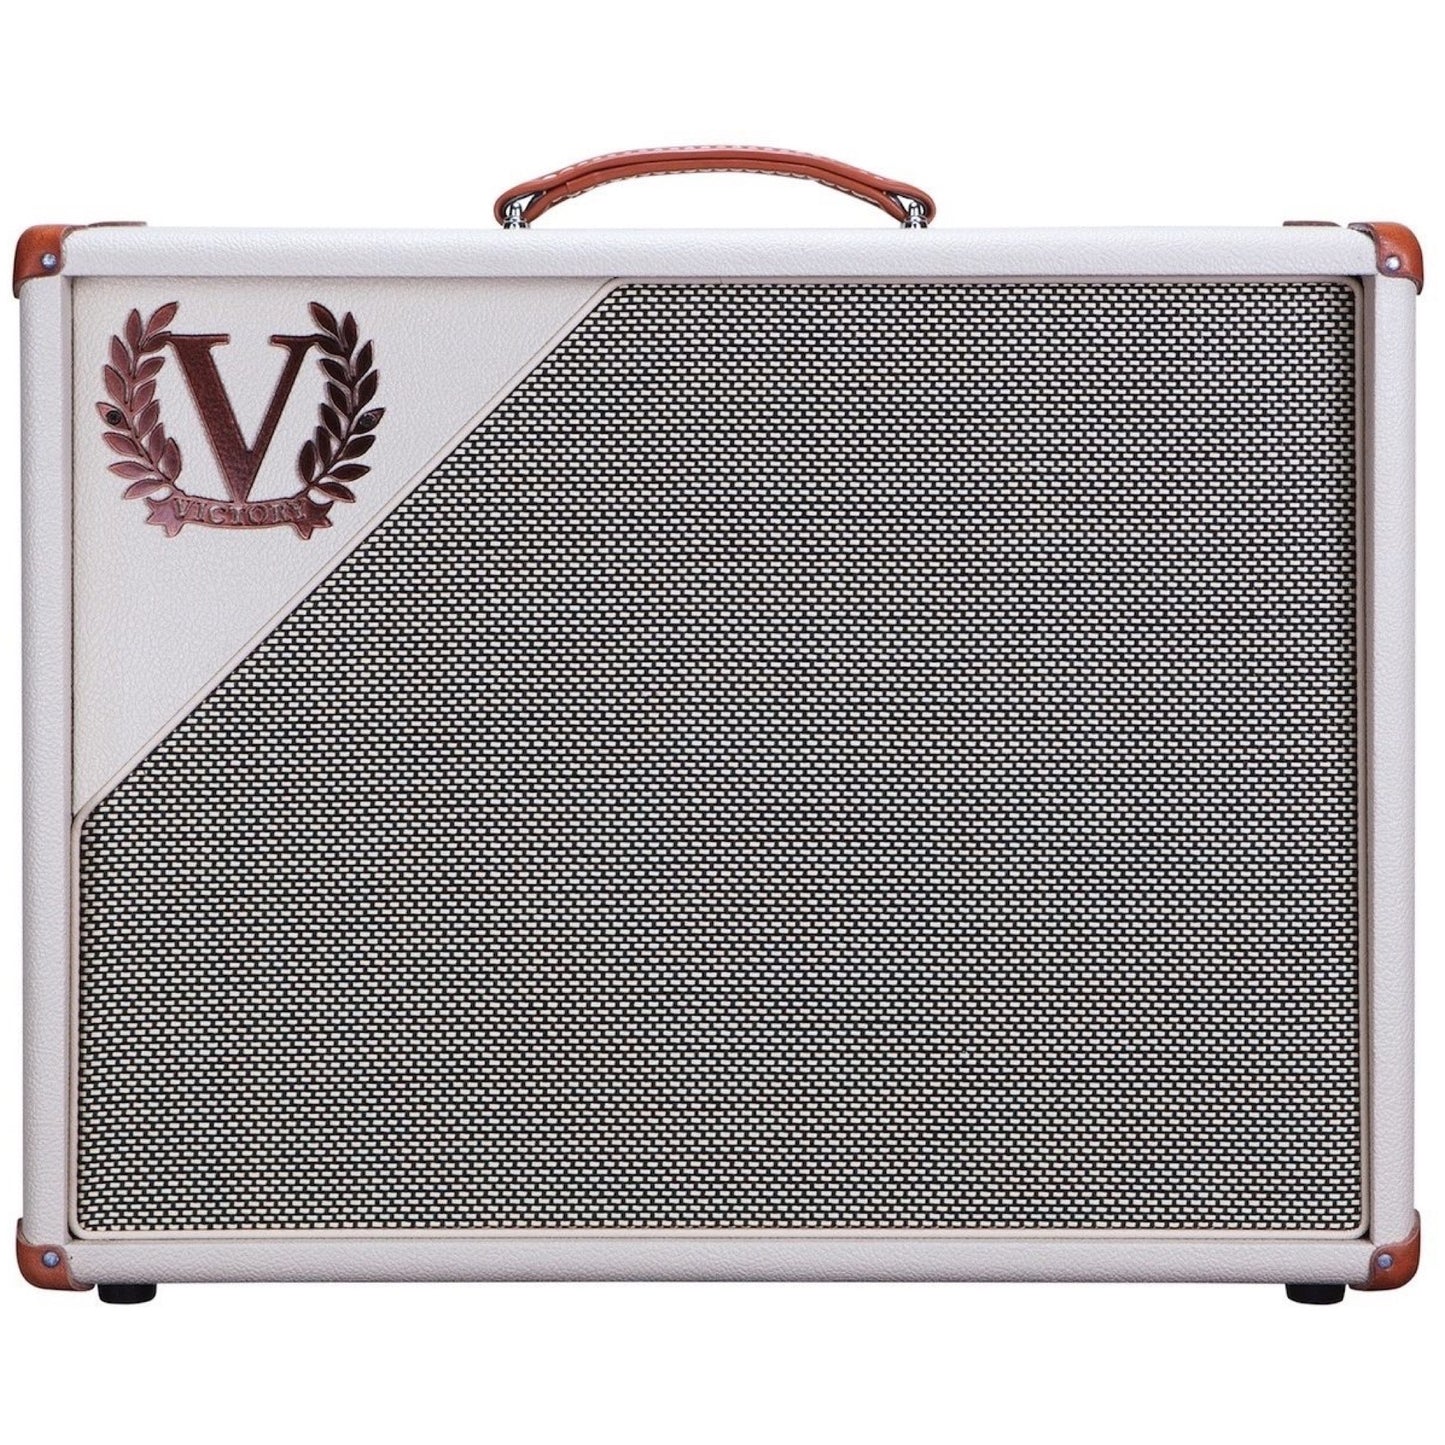 Victory V112-WC-75 Wide Body Guitar Speaker Cabinet (75 Watts, 1x12 Inch)